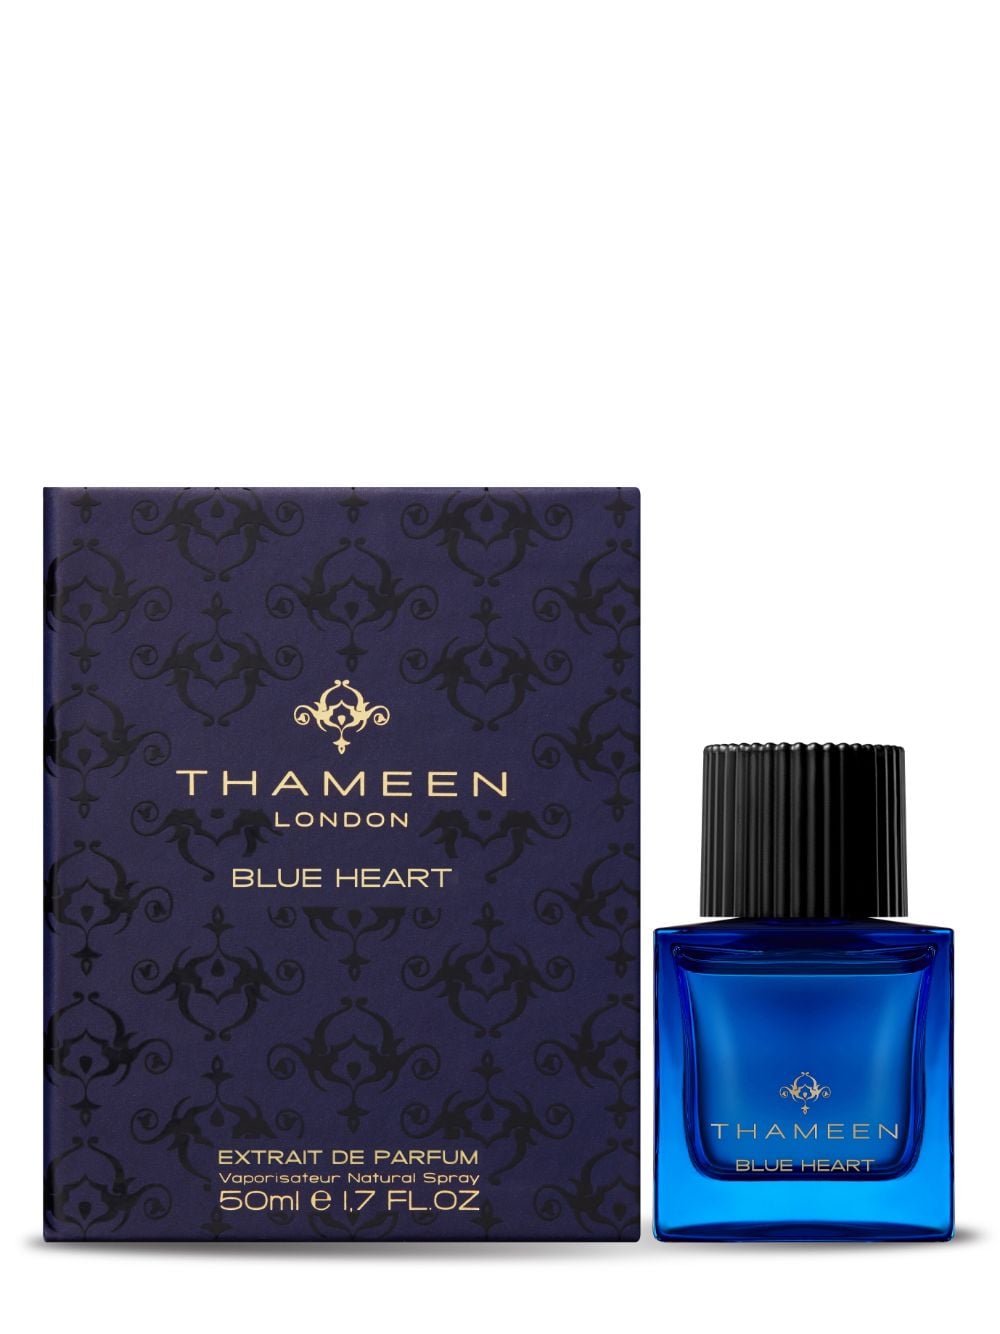 Thameen Blue Heart extrait de parfum - NEUTRAL